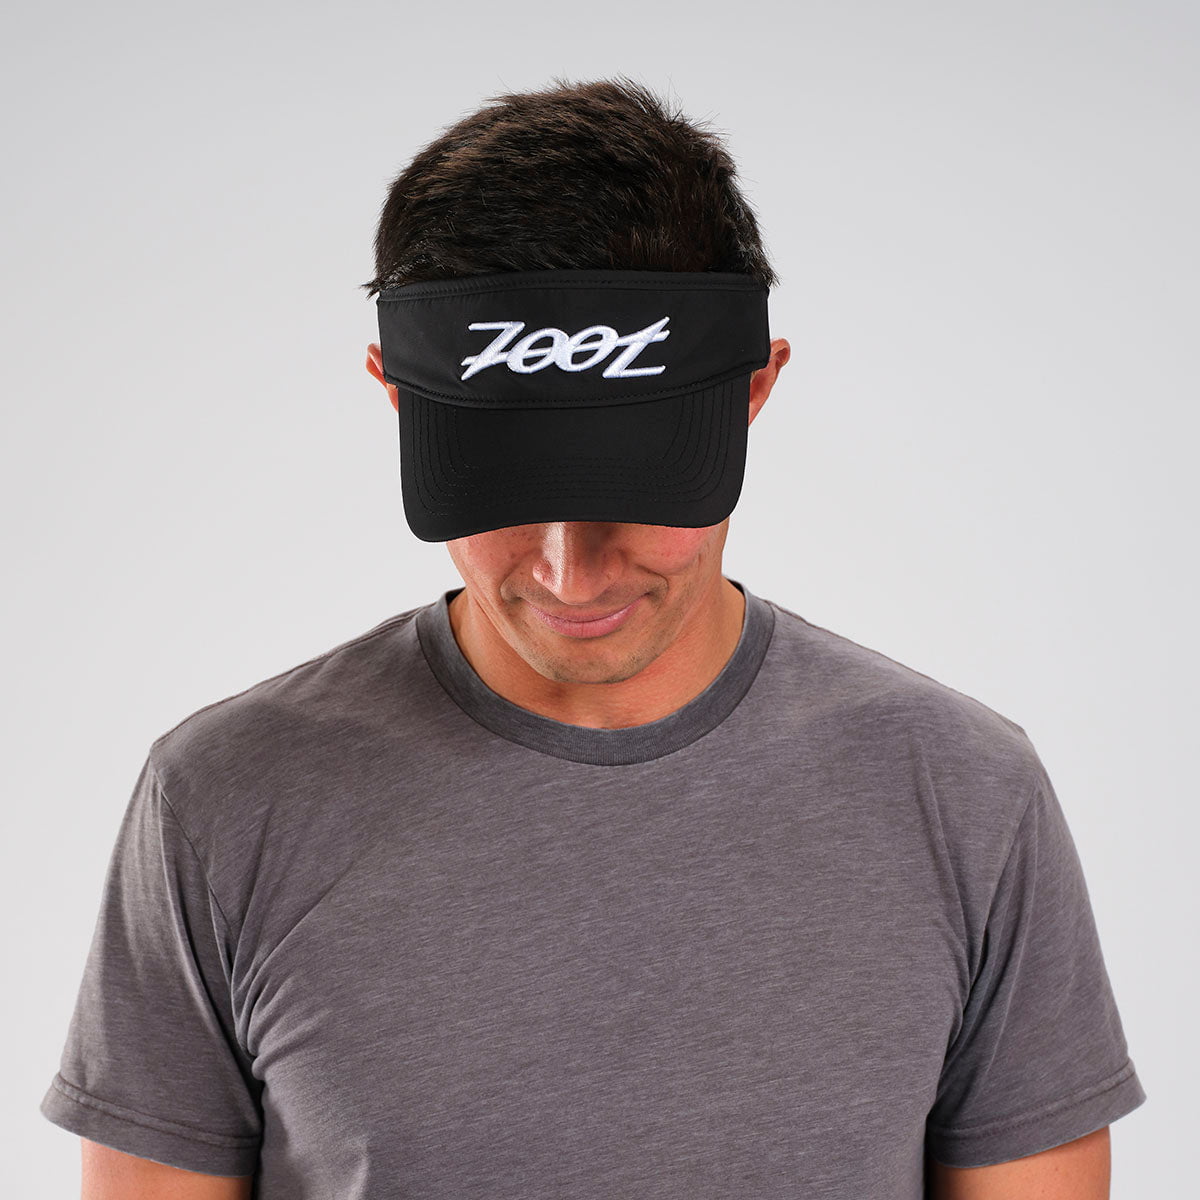 Zoot Sports HEADWEAR OSFA Unisex Tech Visor - Black